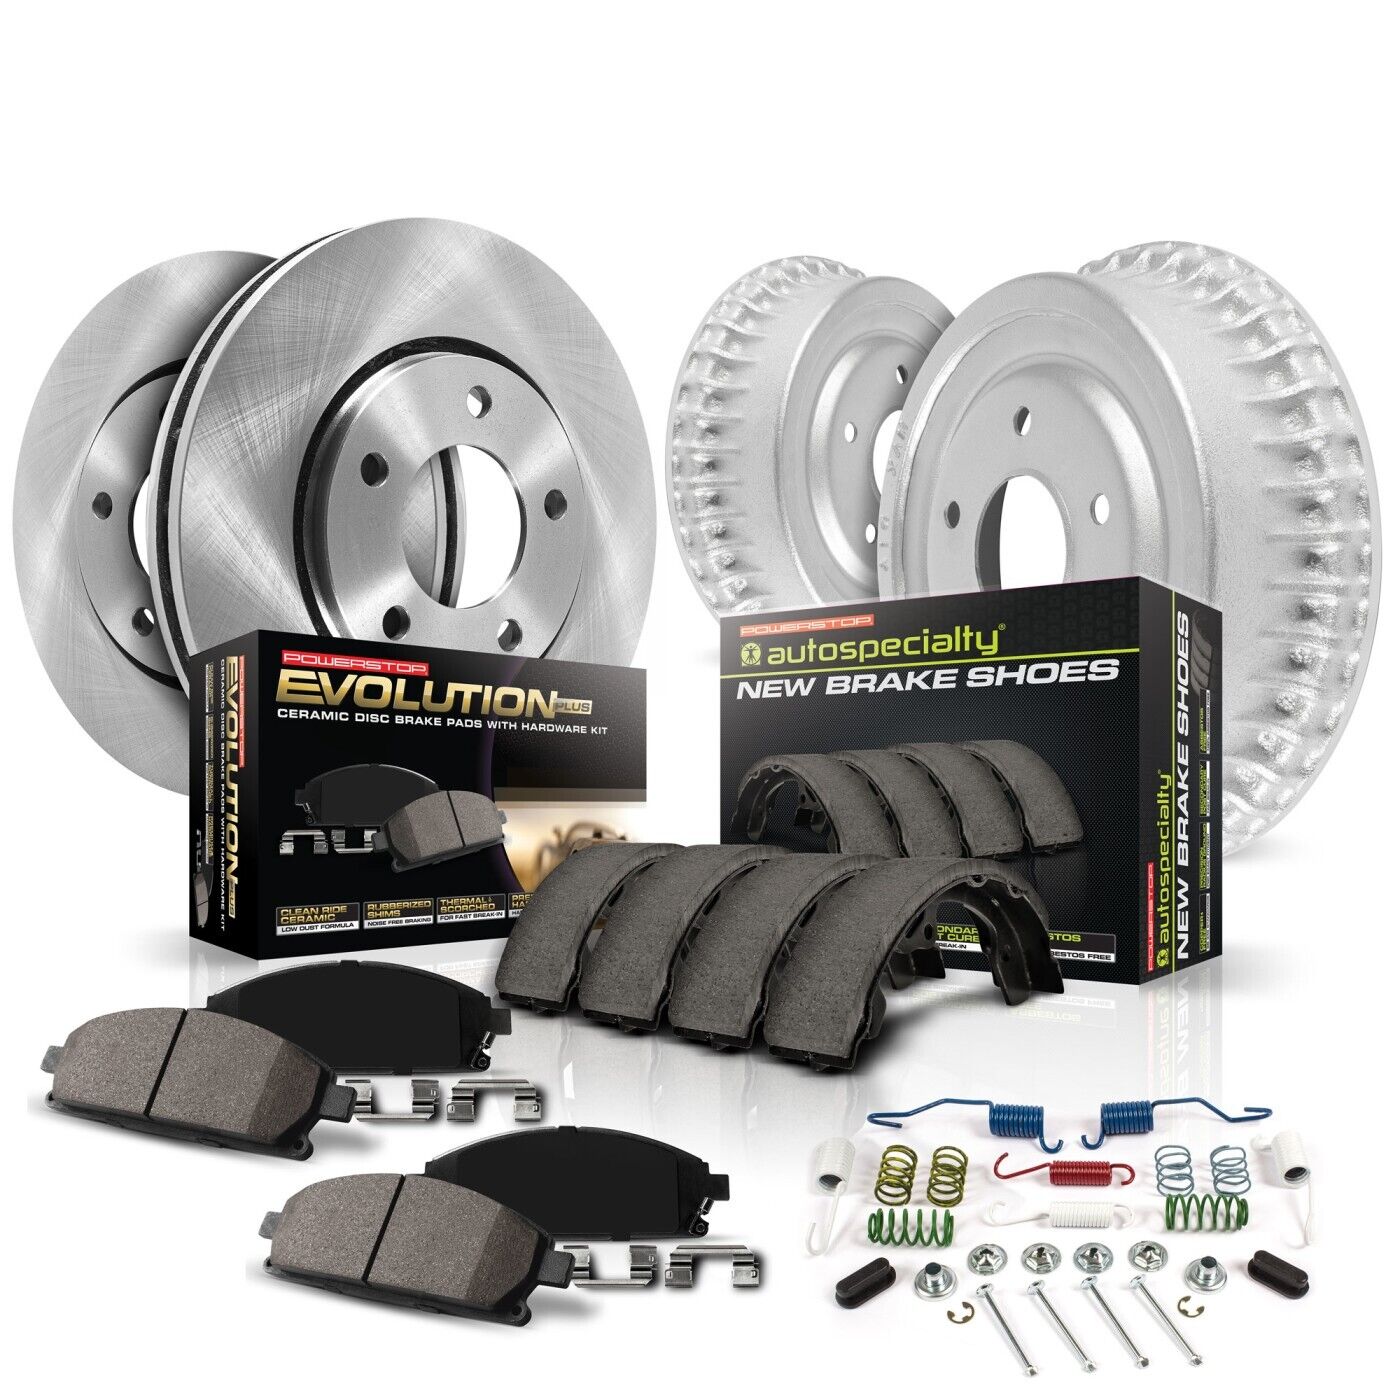 Powerstop KOE15442DK 4-Wheel Set Brake Discs And Pad Kit Front & Rear for Escort